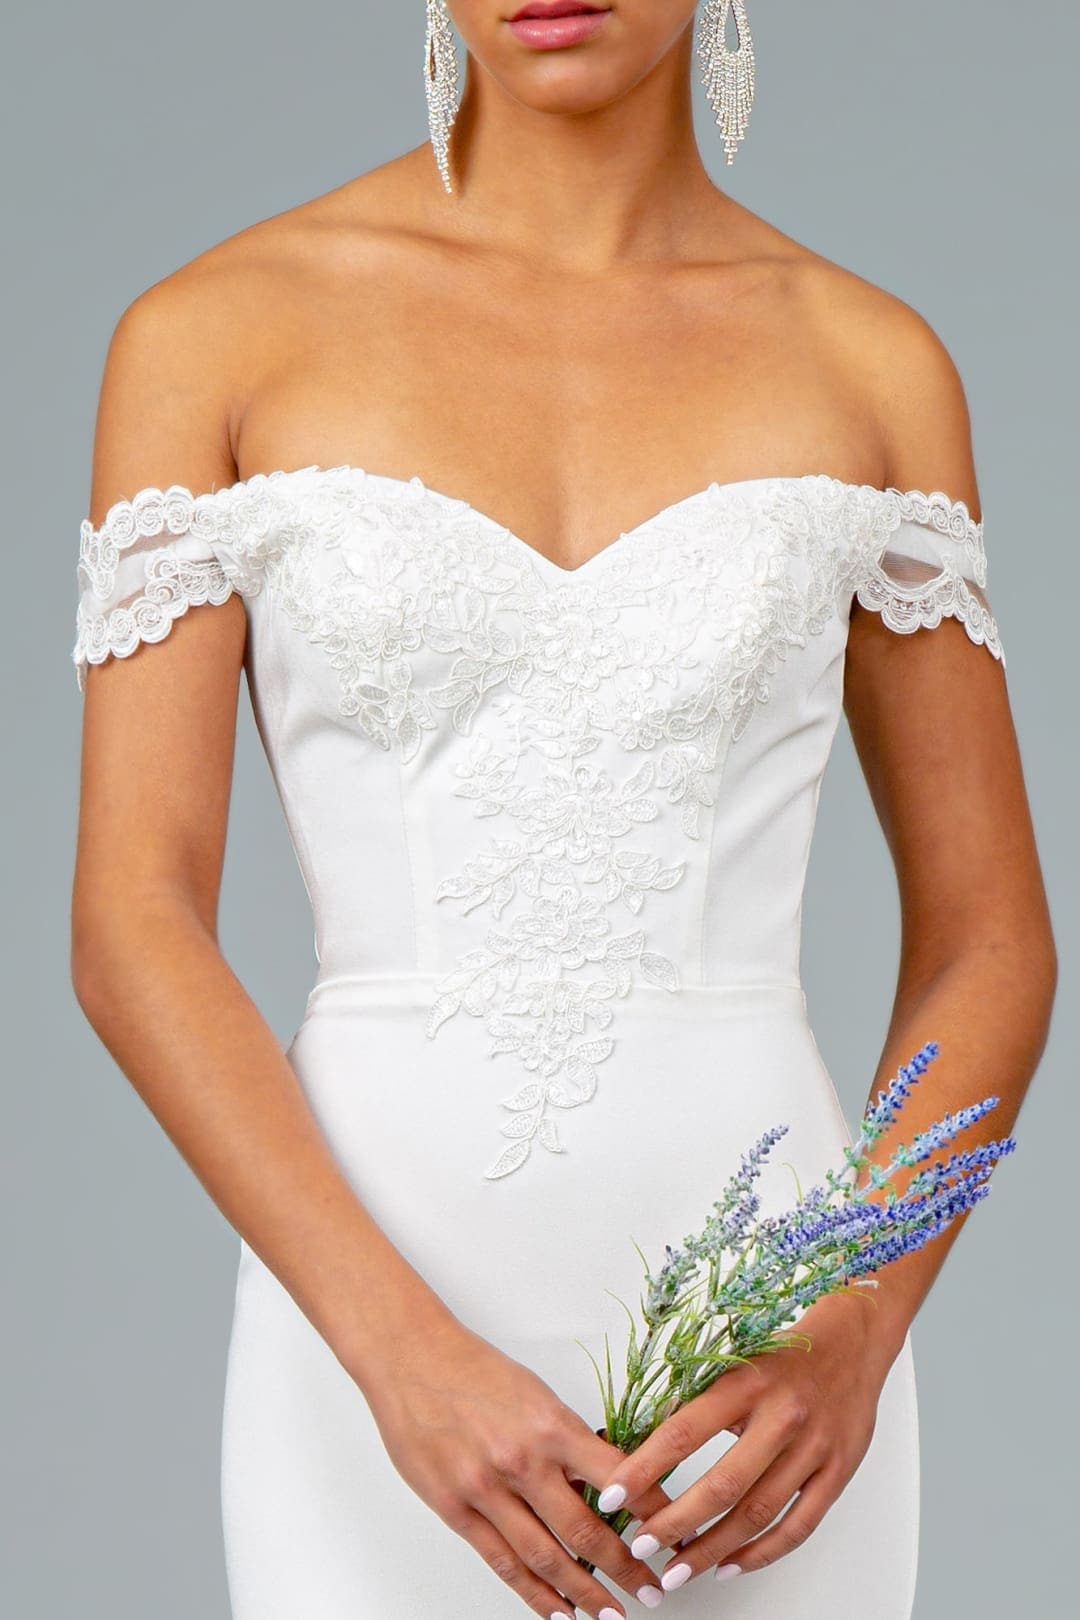 Wedding White Dress